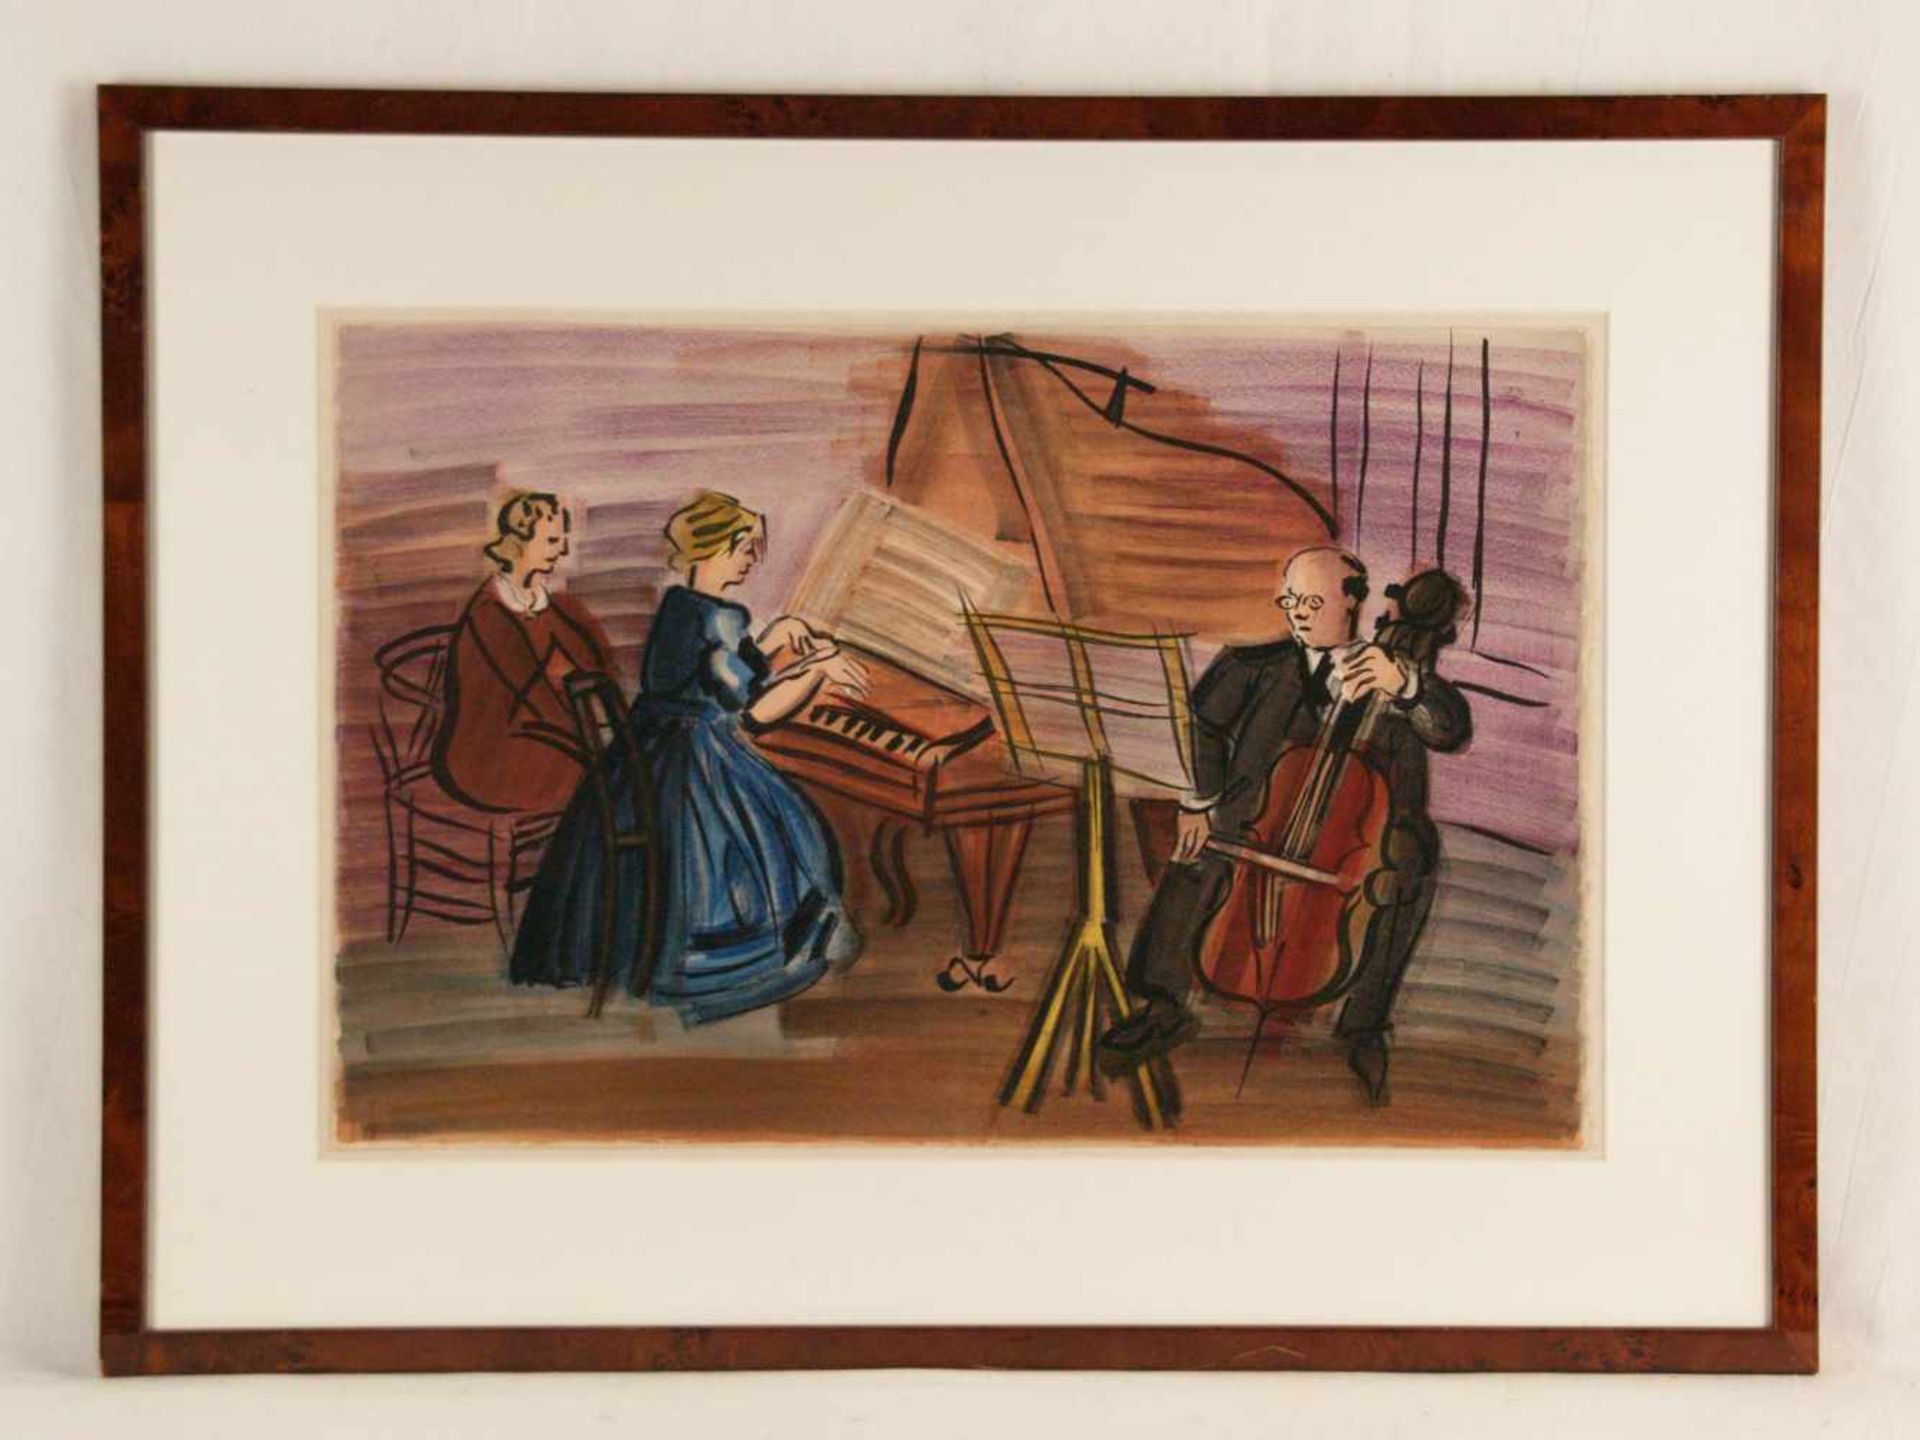 Dufy, Raoul (1877-1953) - "Concert des Anges", 1963, Farblithographie, Gesamtauflage: 298 Ex.,